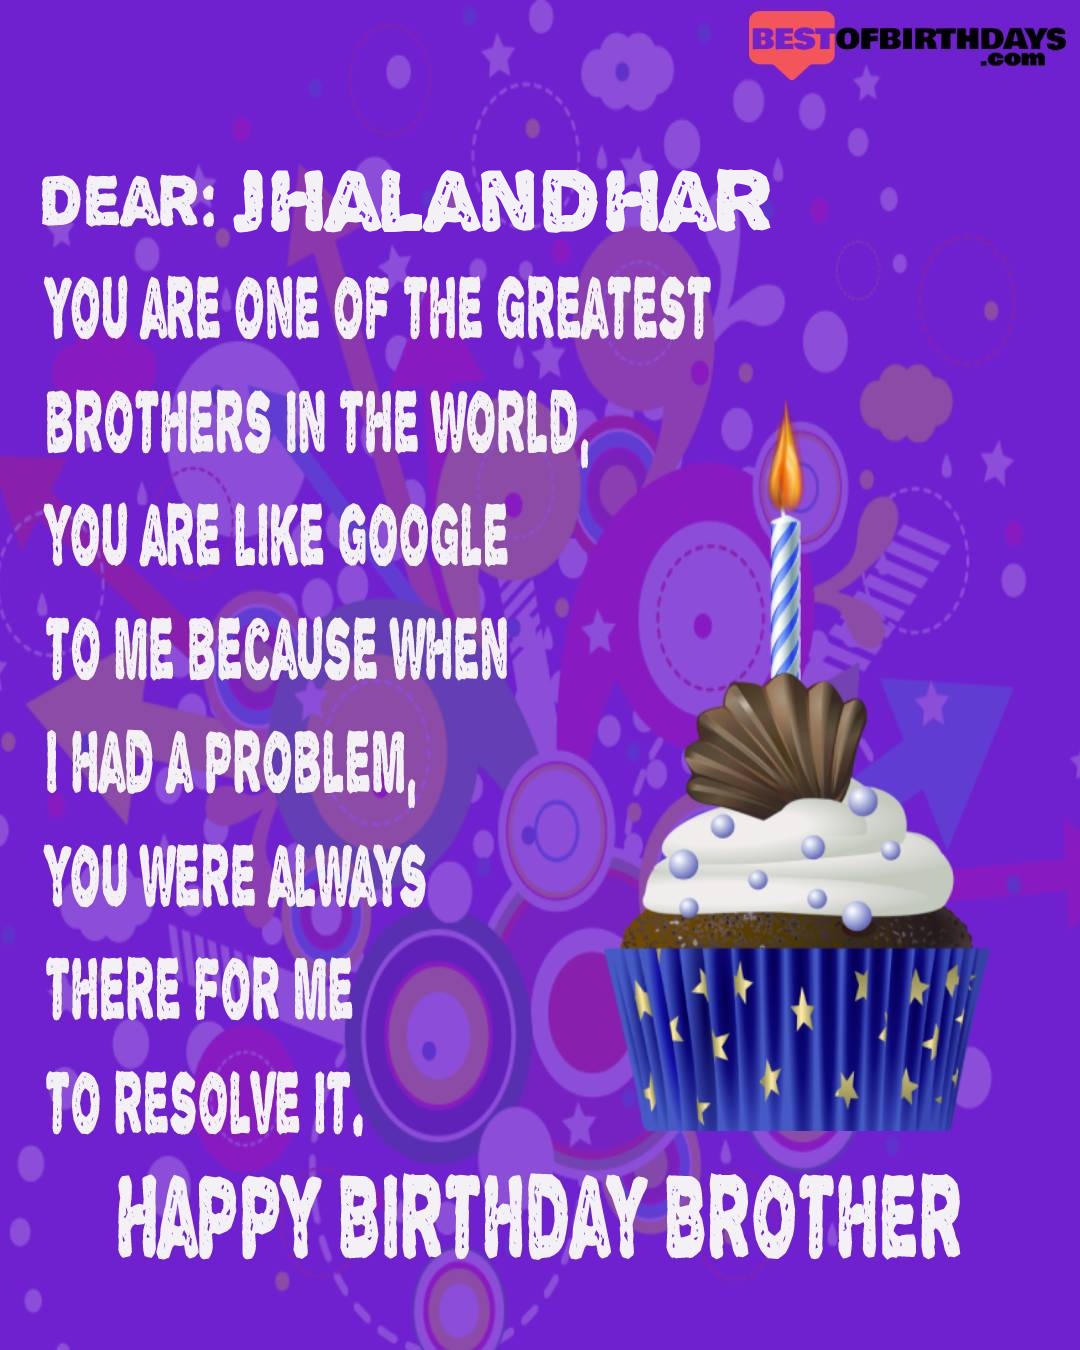 Happy birthday jhalandhar bhai brother bro